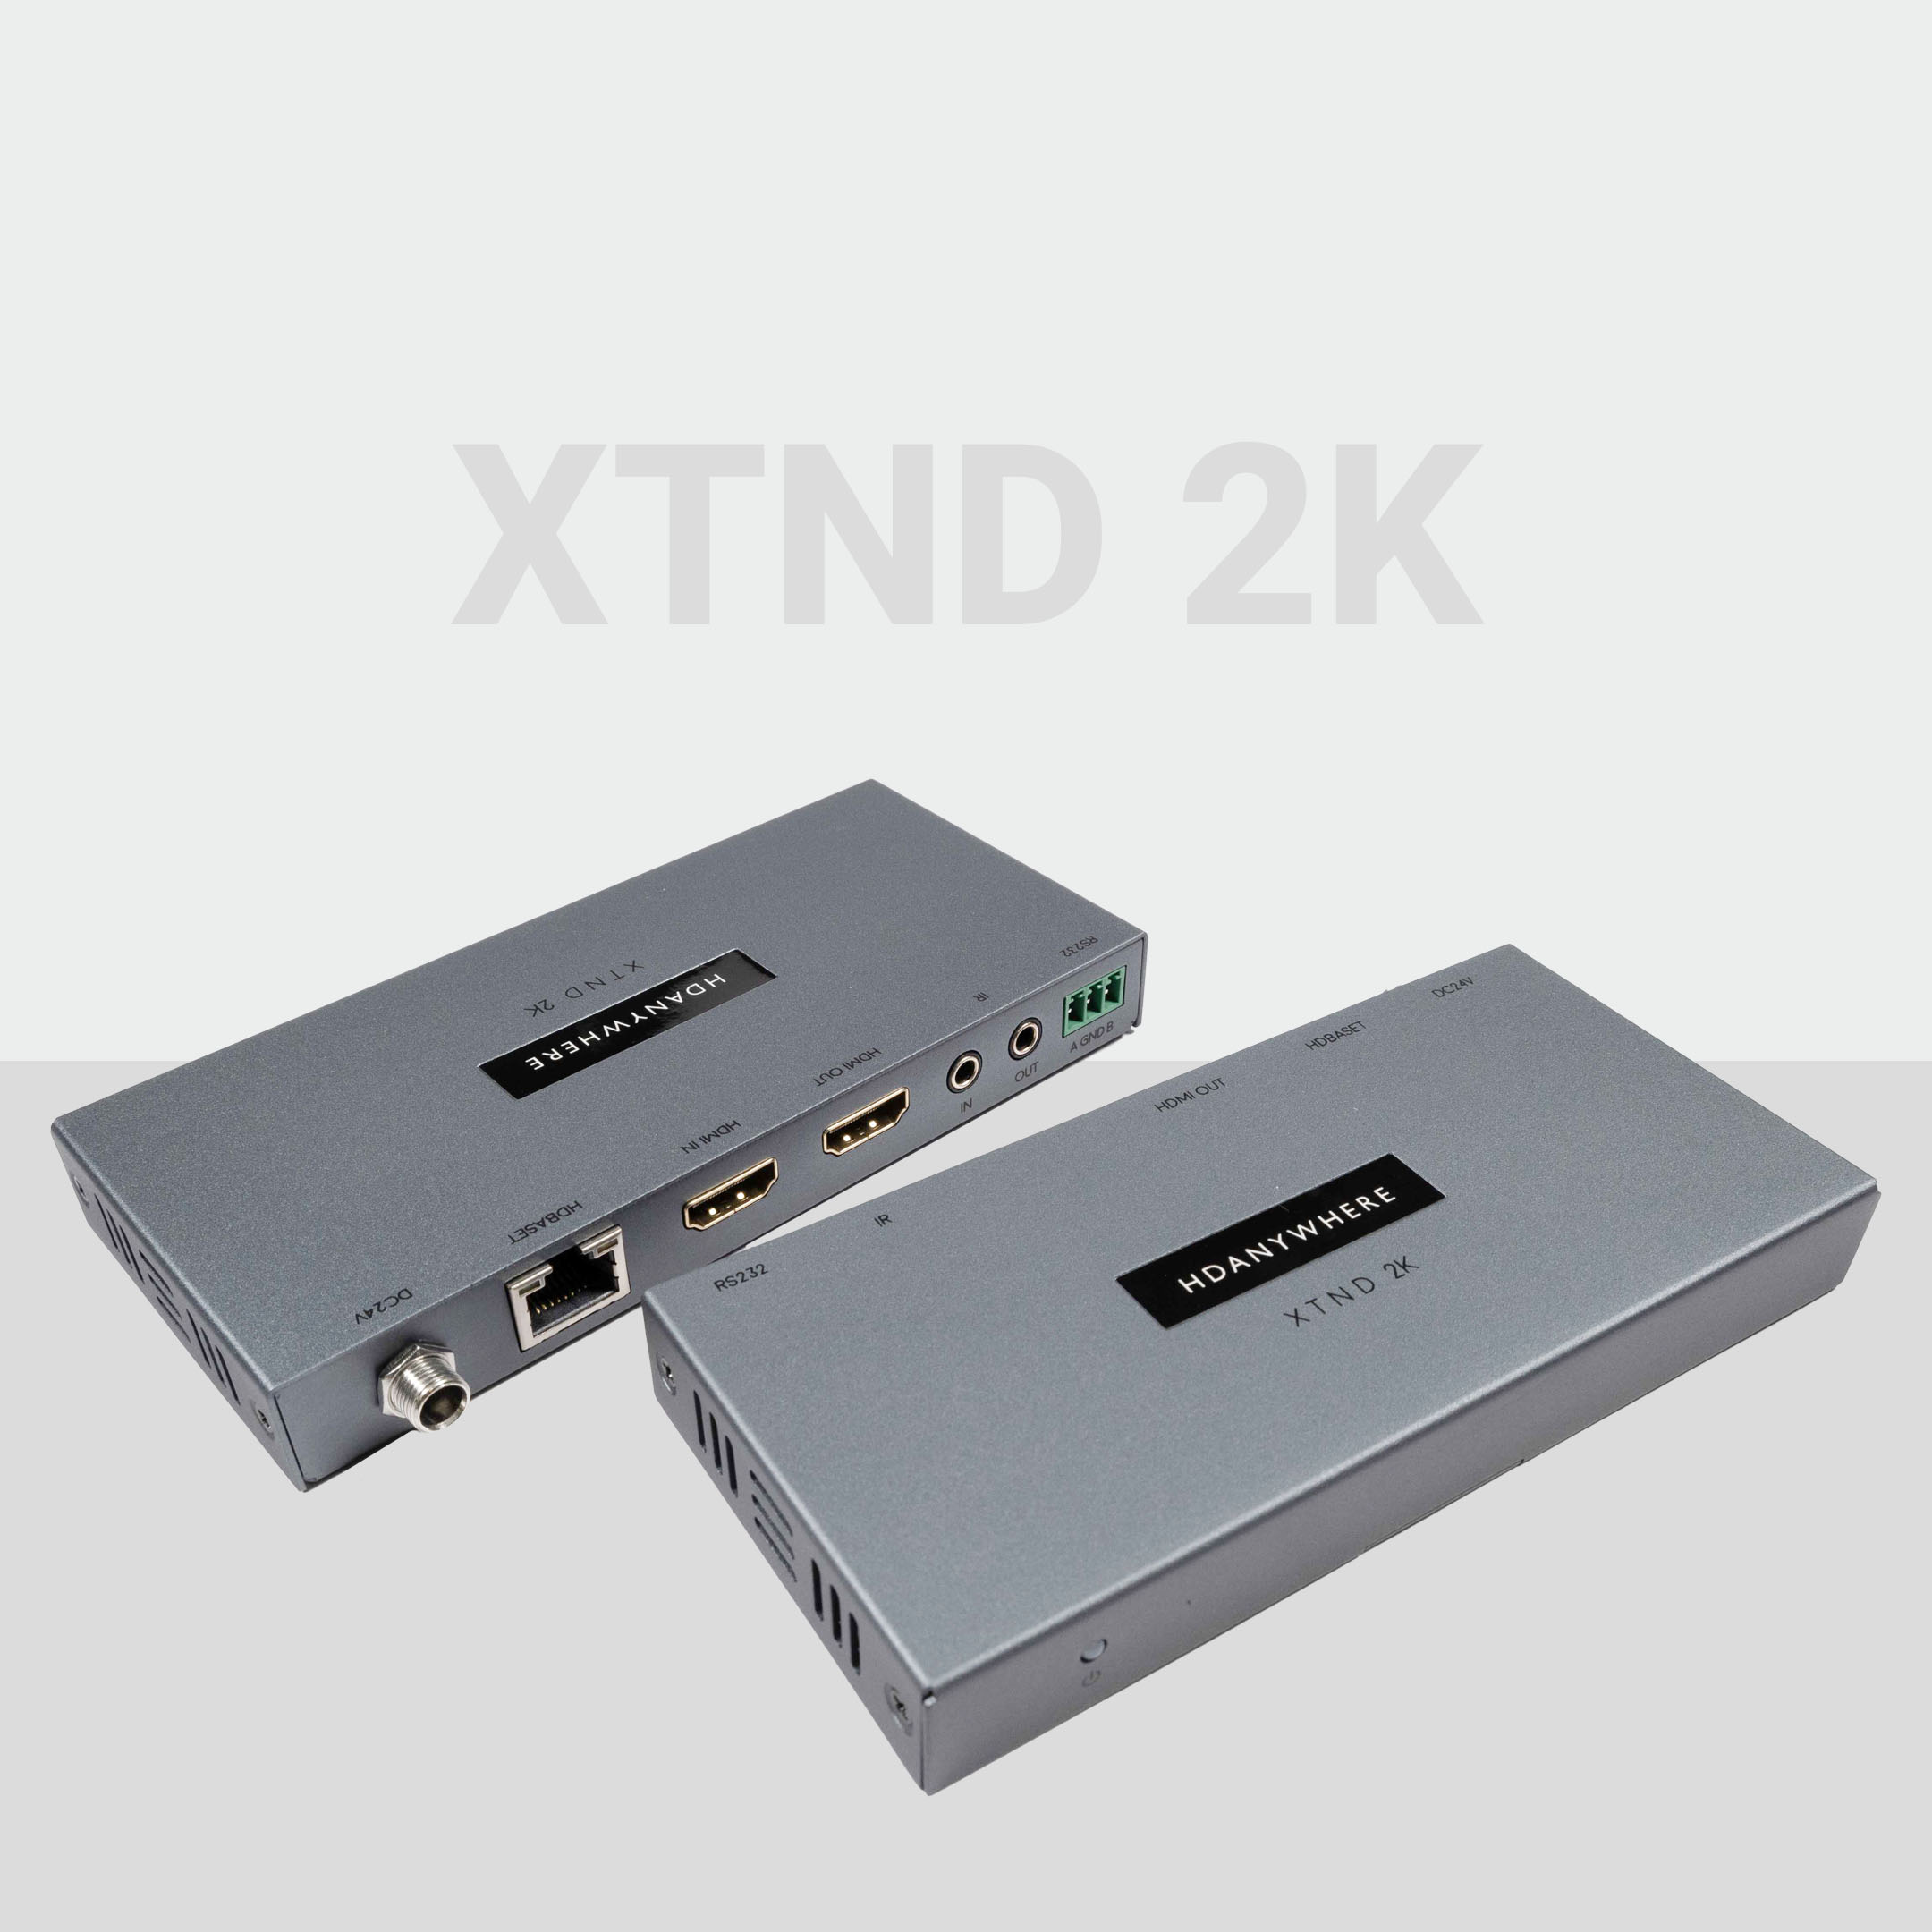 XTND 2K (150)